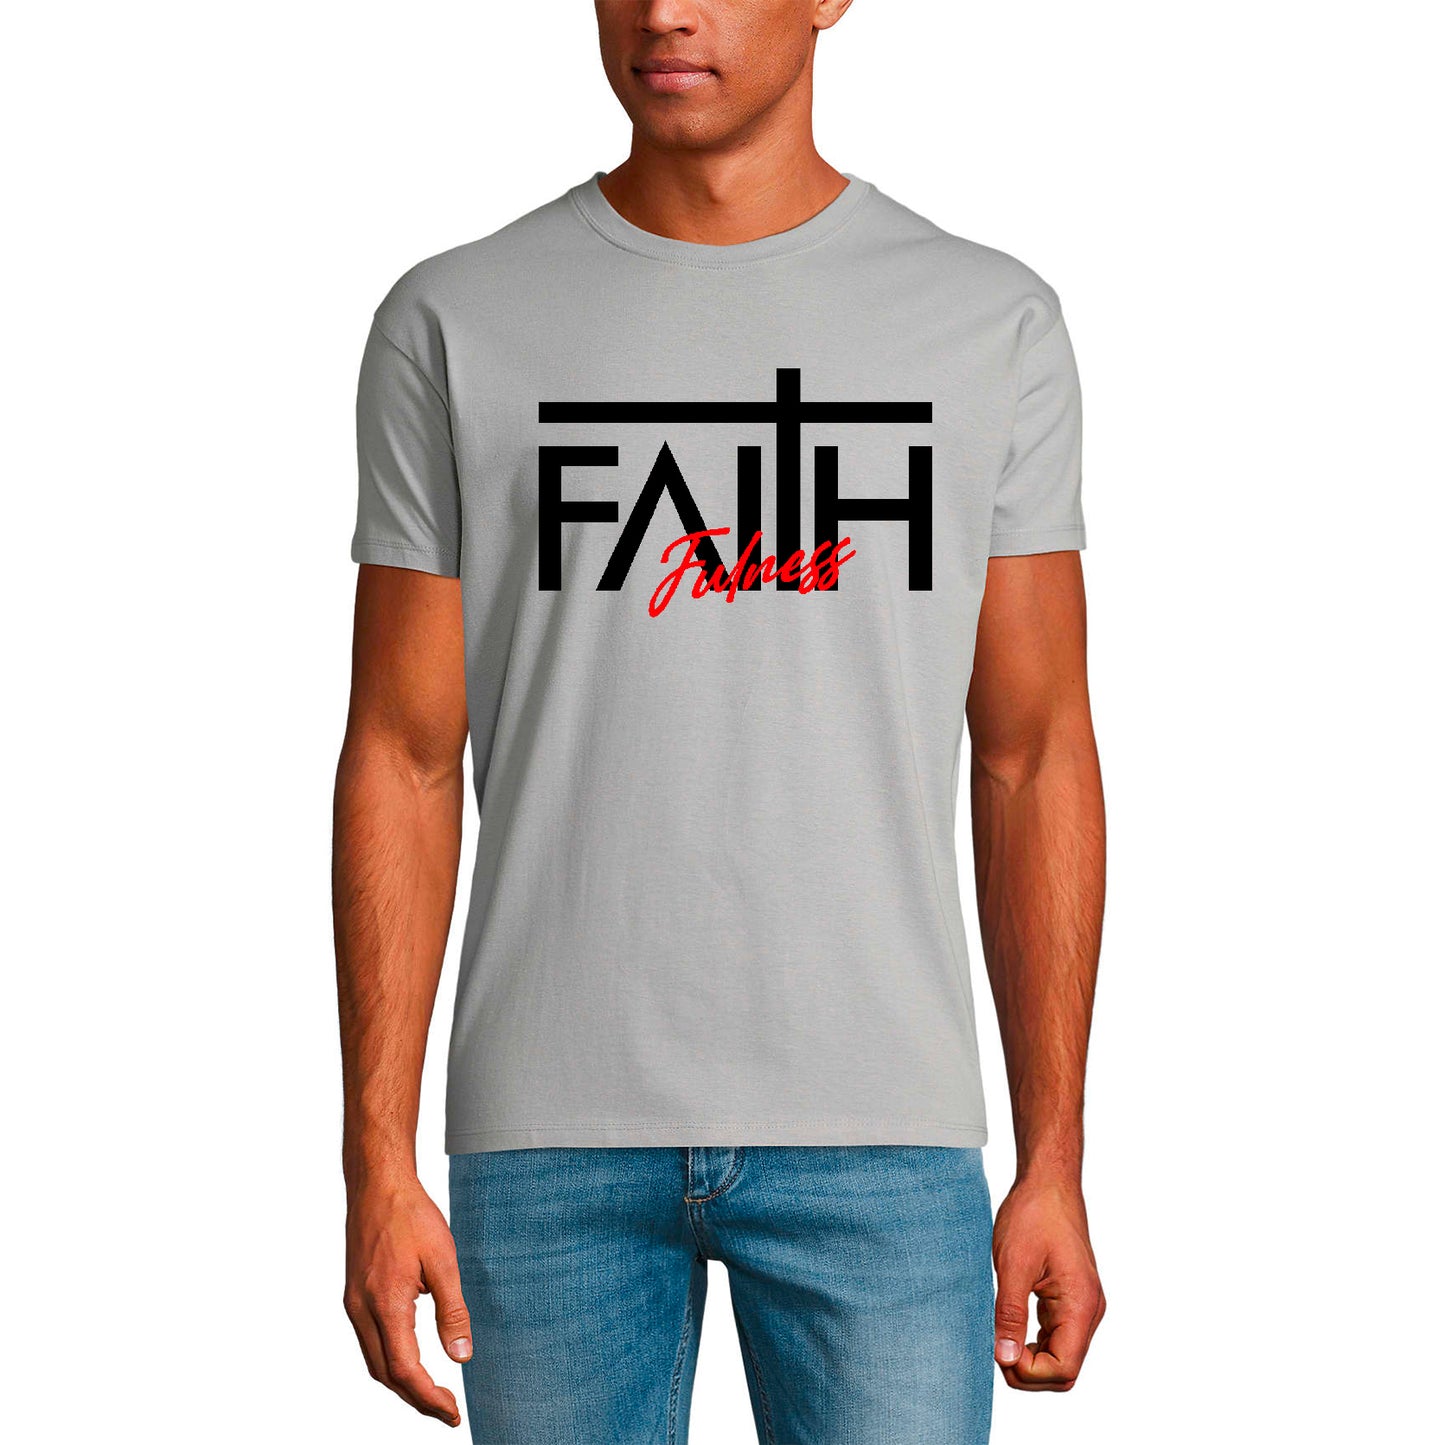 ULTRABASIC Men's T-Shirt Faith Fulness - Bible Christian Religious Shirt